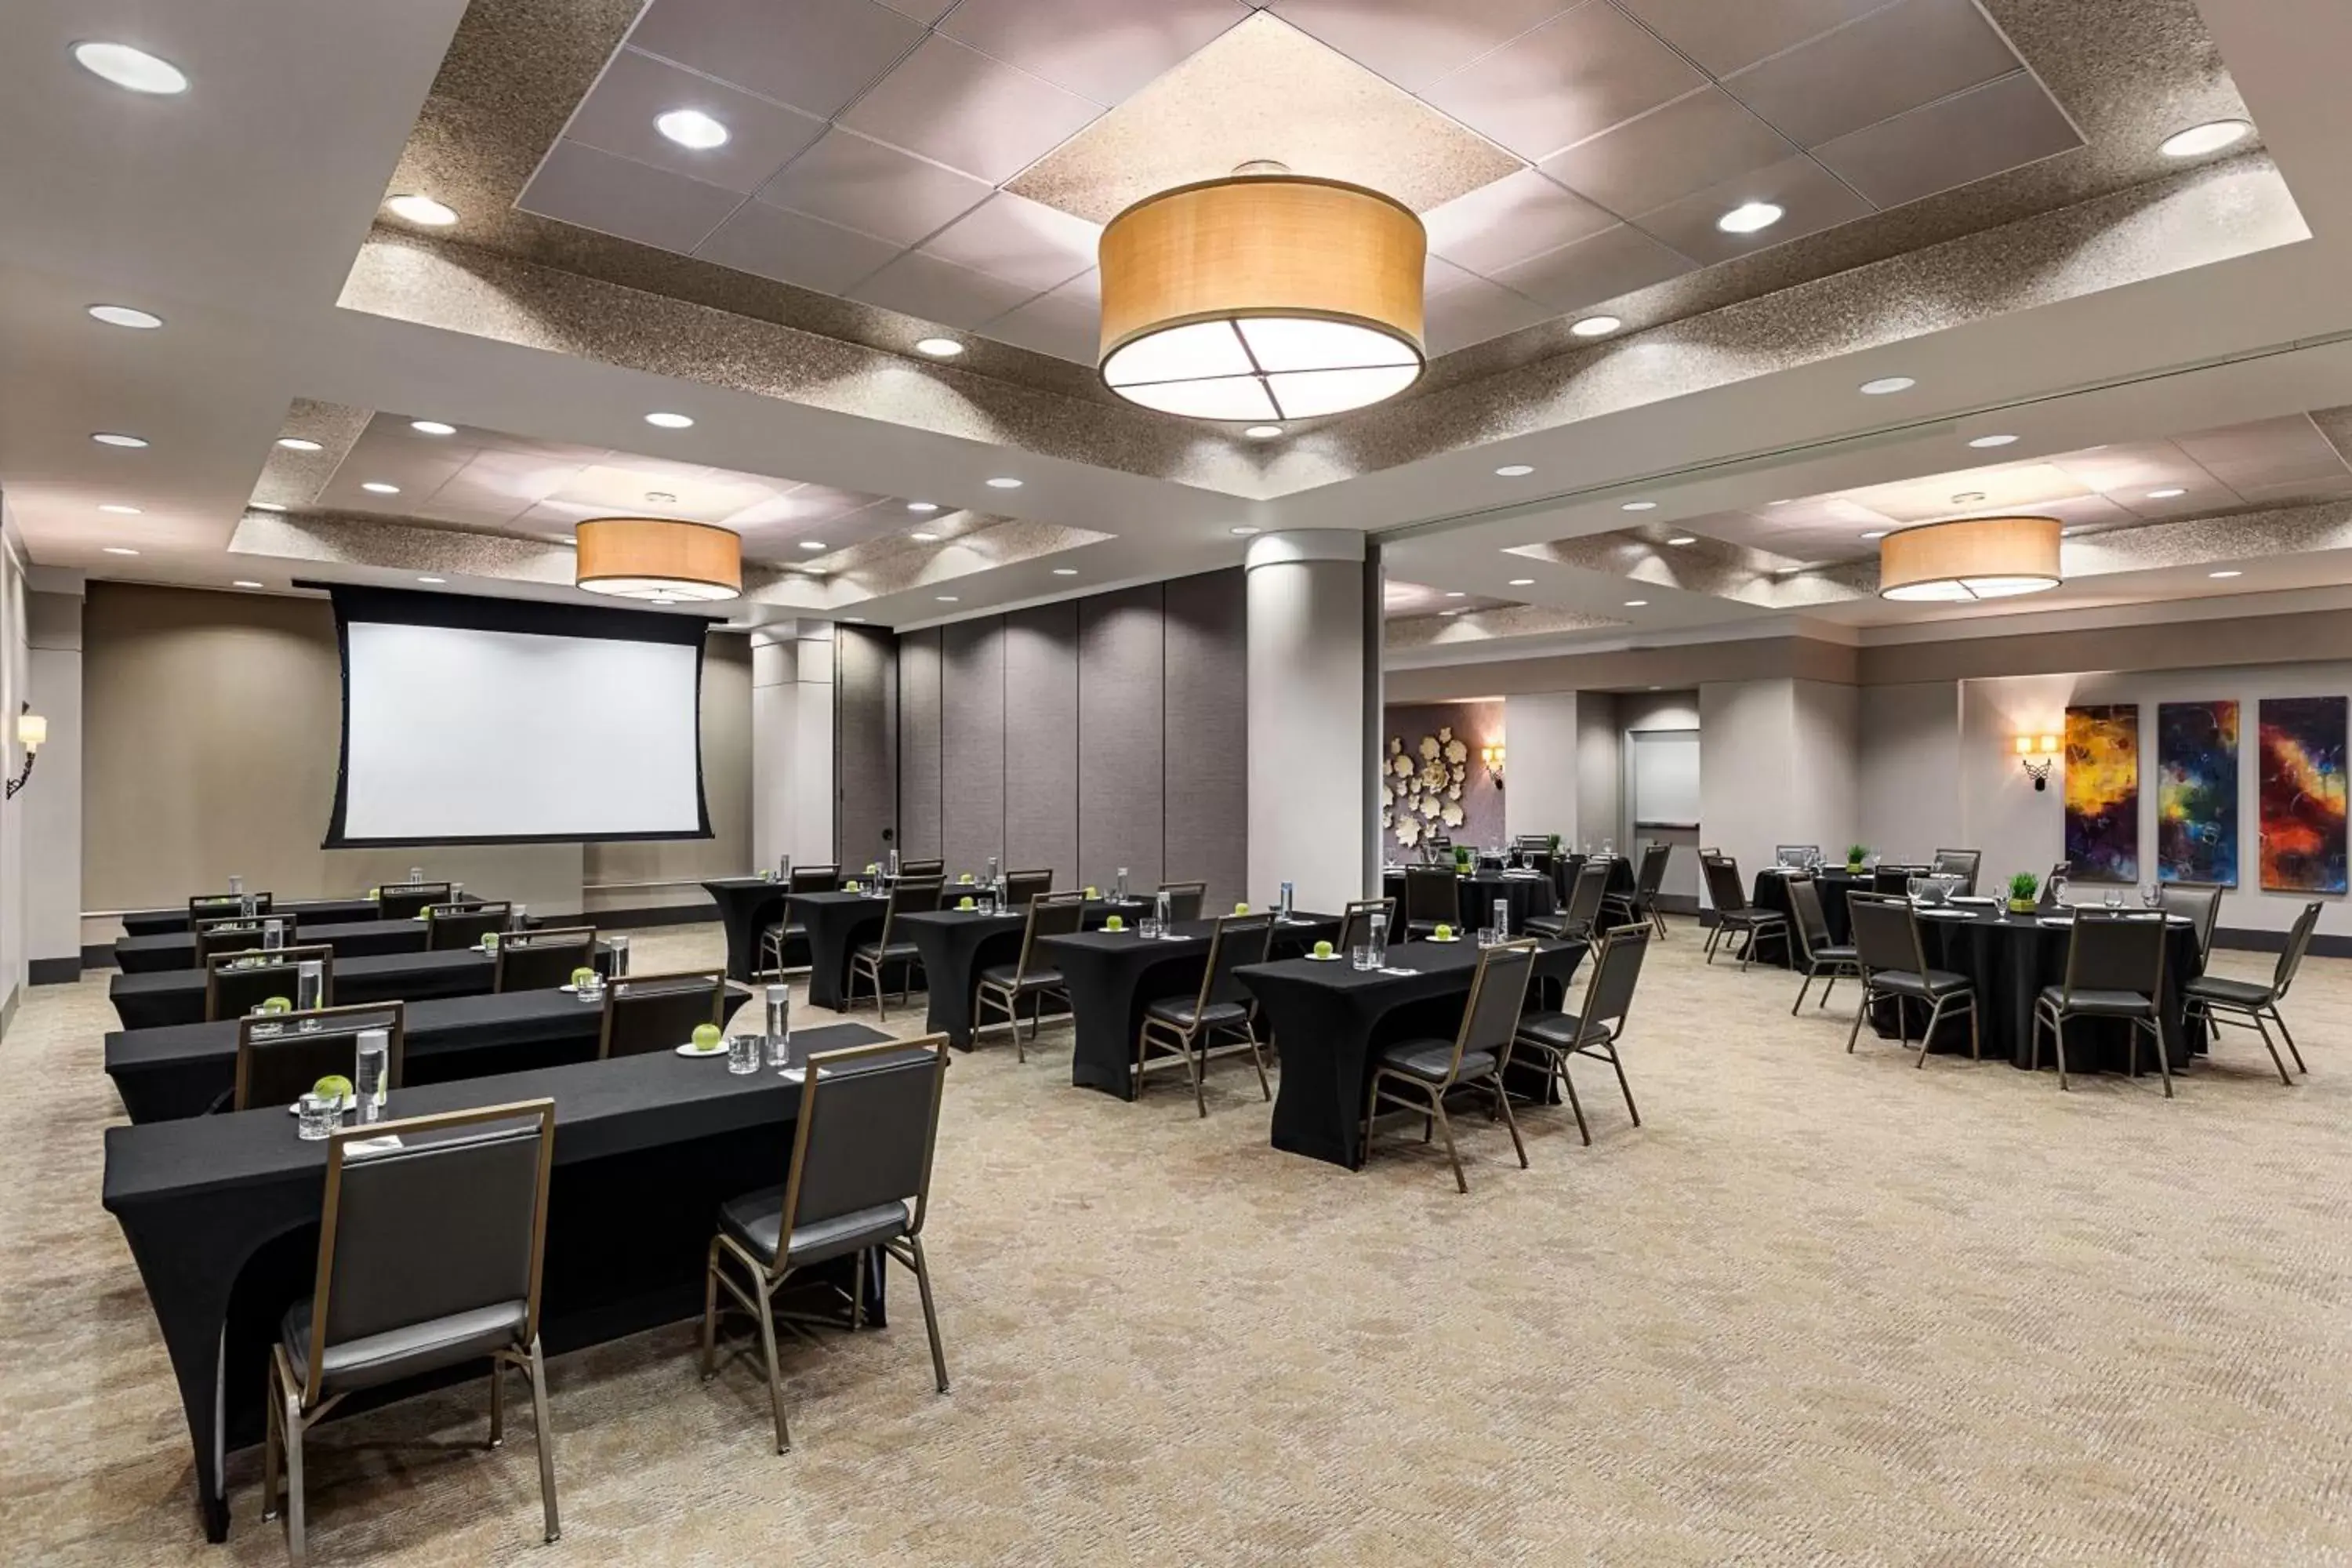 Meeting/conference room in Magnolia Hotel Houston, a Tribute Portfolio Hotel